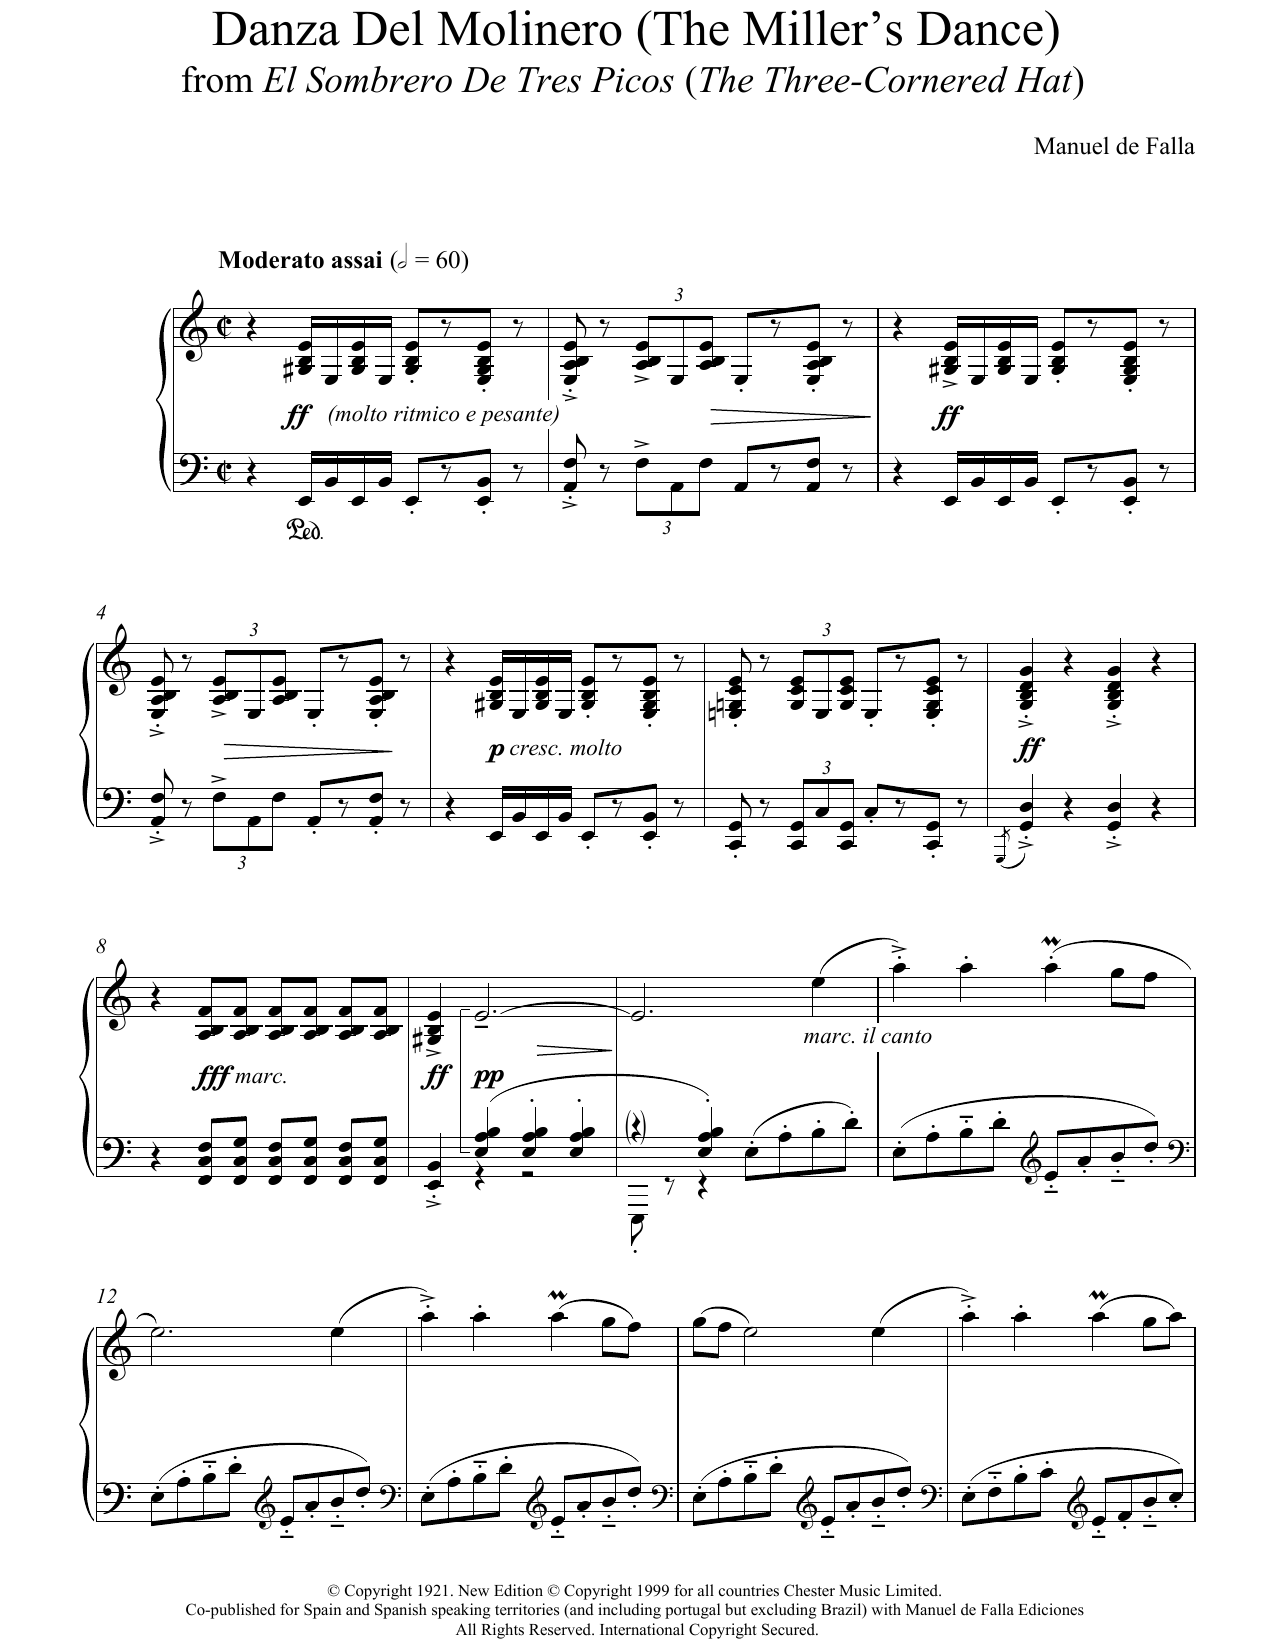 Manuel De Falla Danza Del Molinero ('The Miller's Dance') (From El Sombrero De Tres Picos ('The Three-Cornered Hat') Sheet Music Notes & Chords for Guitar - Download or Print PDF